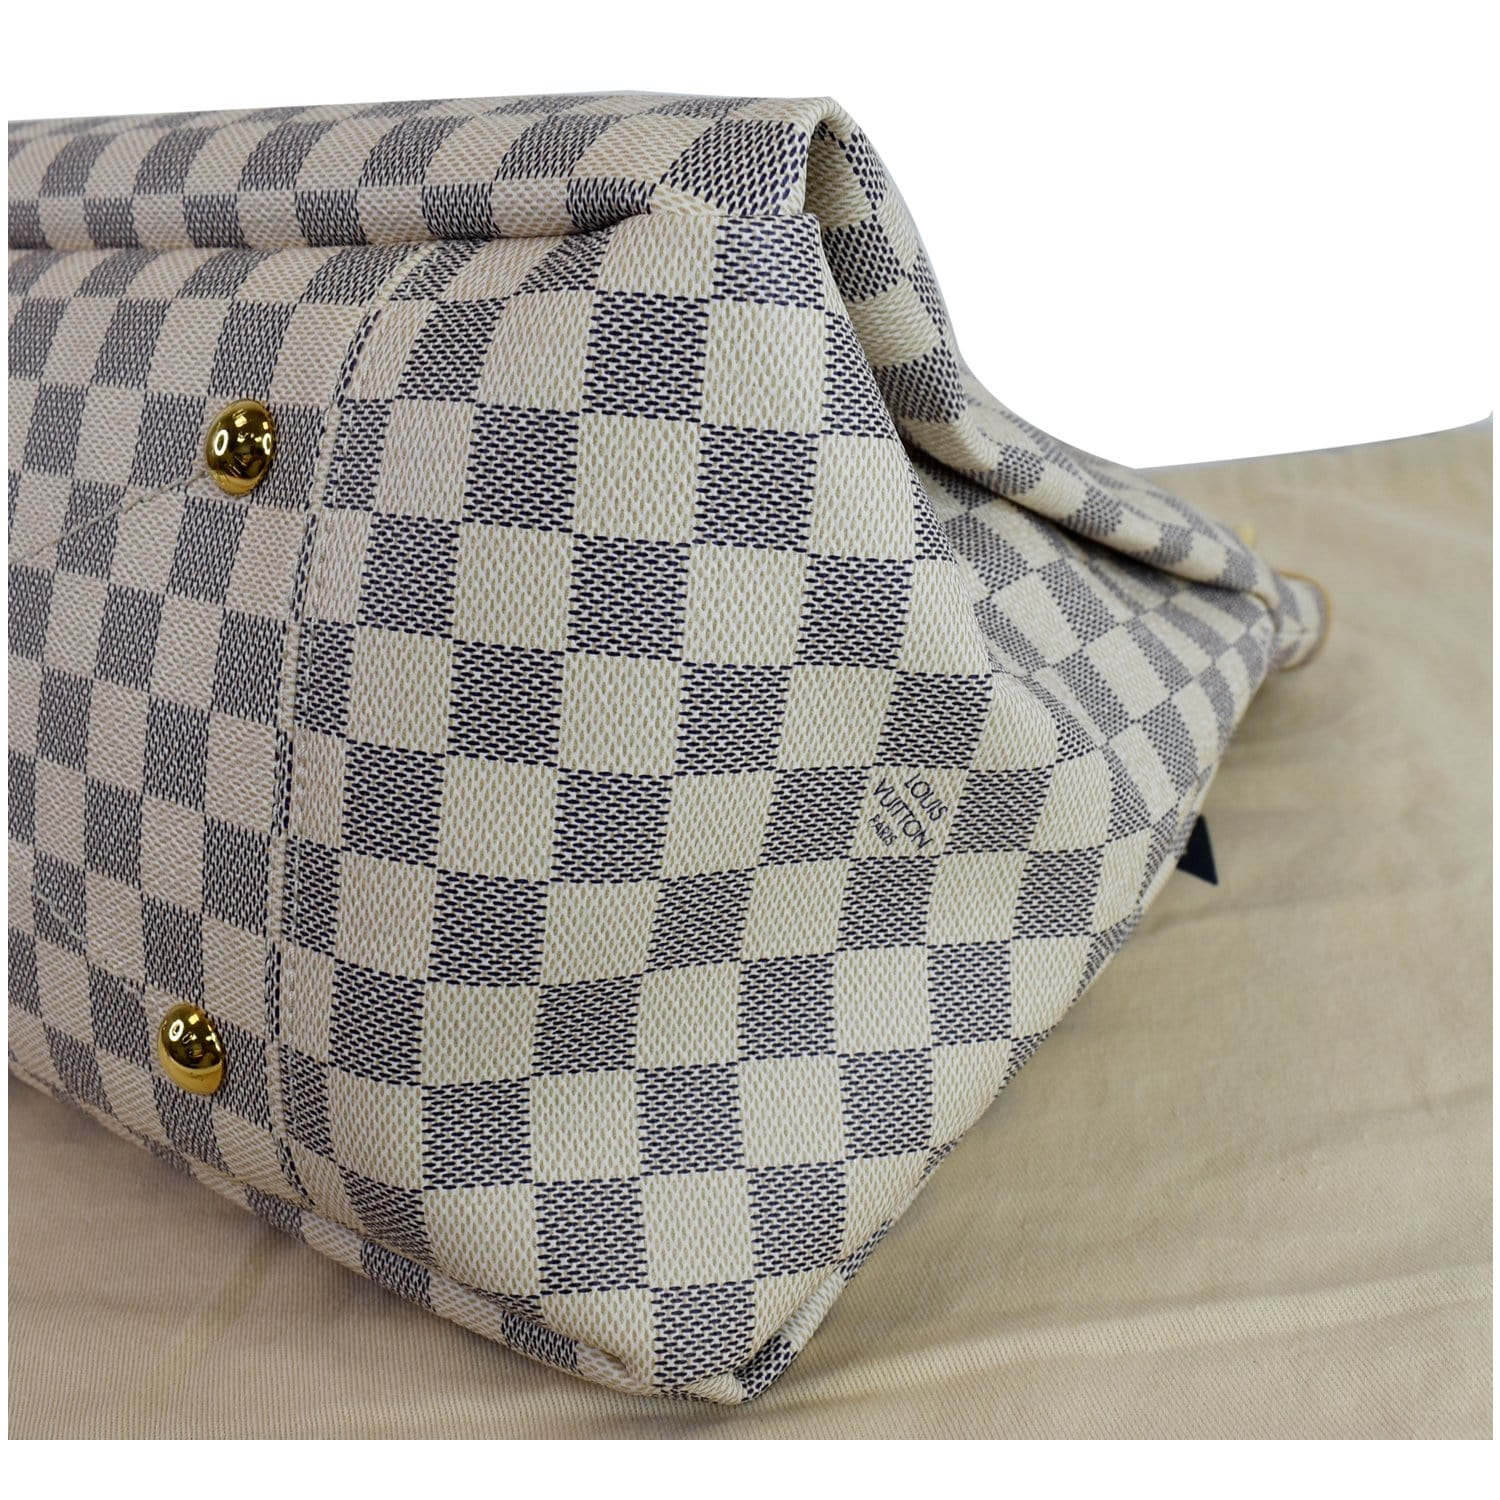 louis vuitton white grey checkered bag